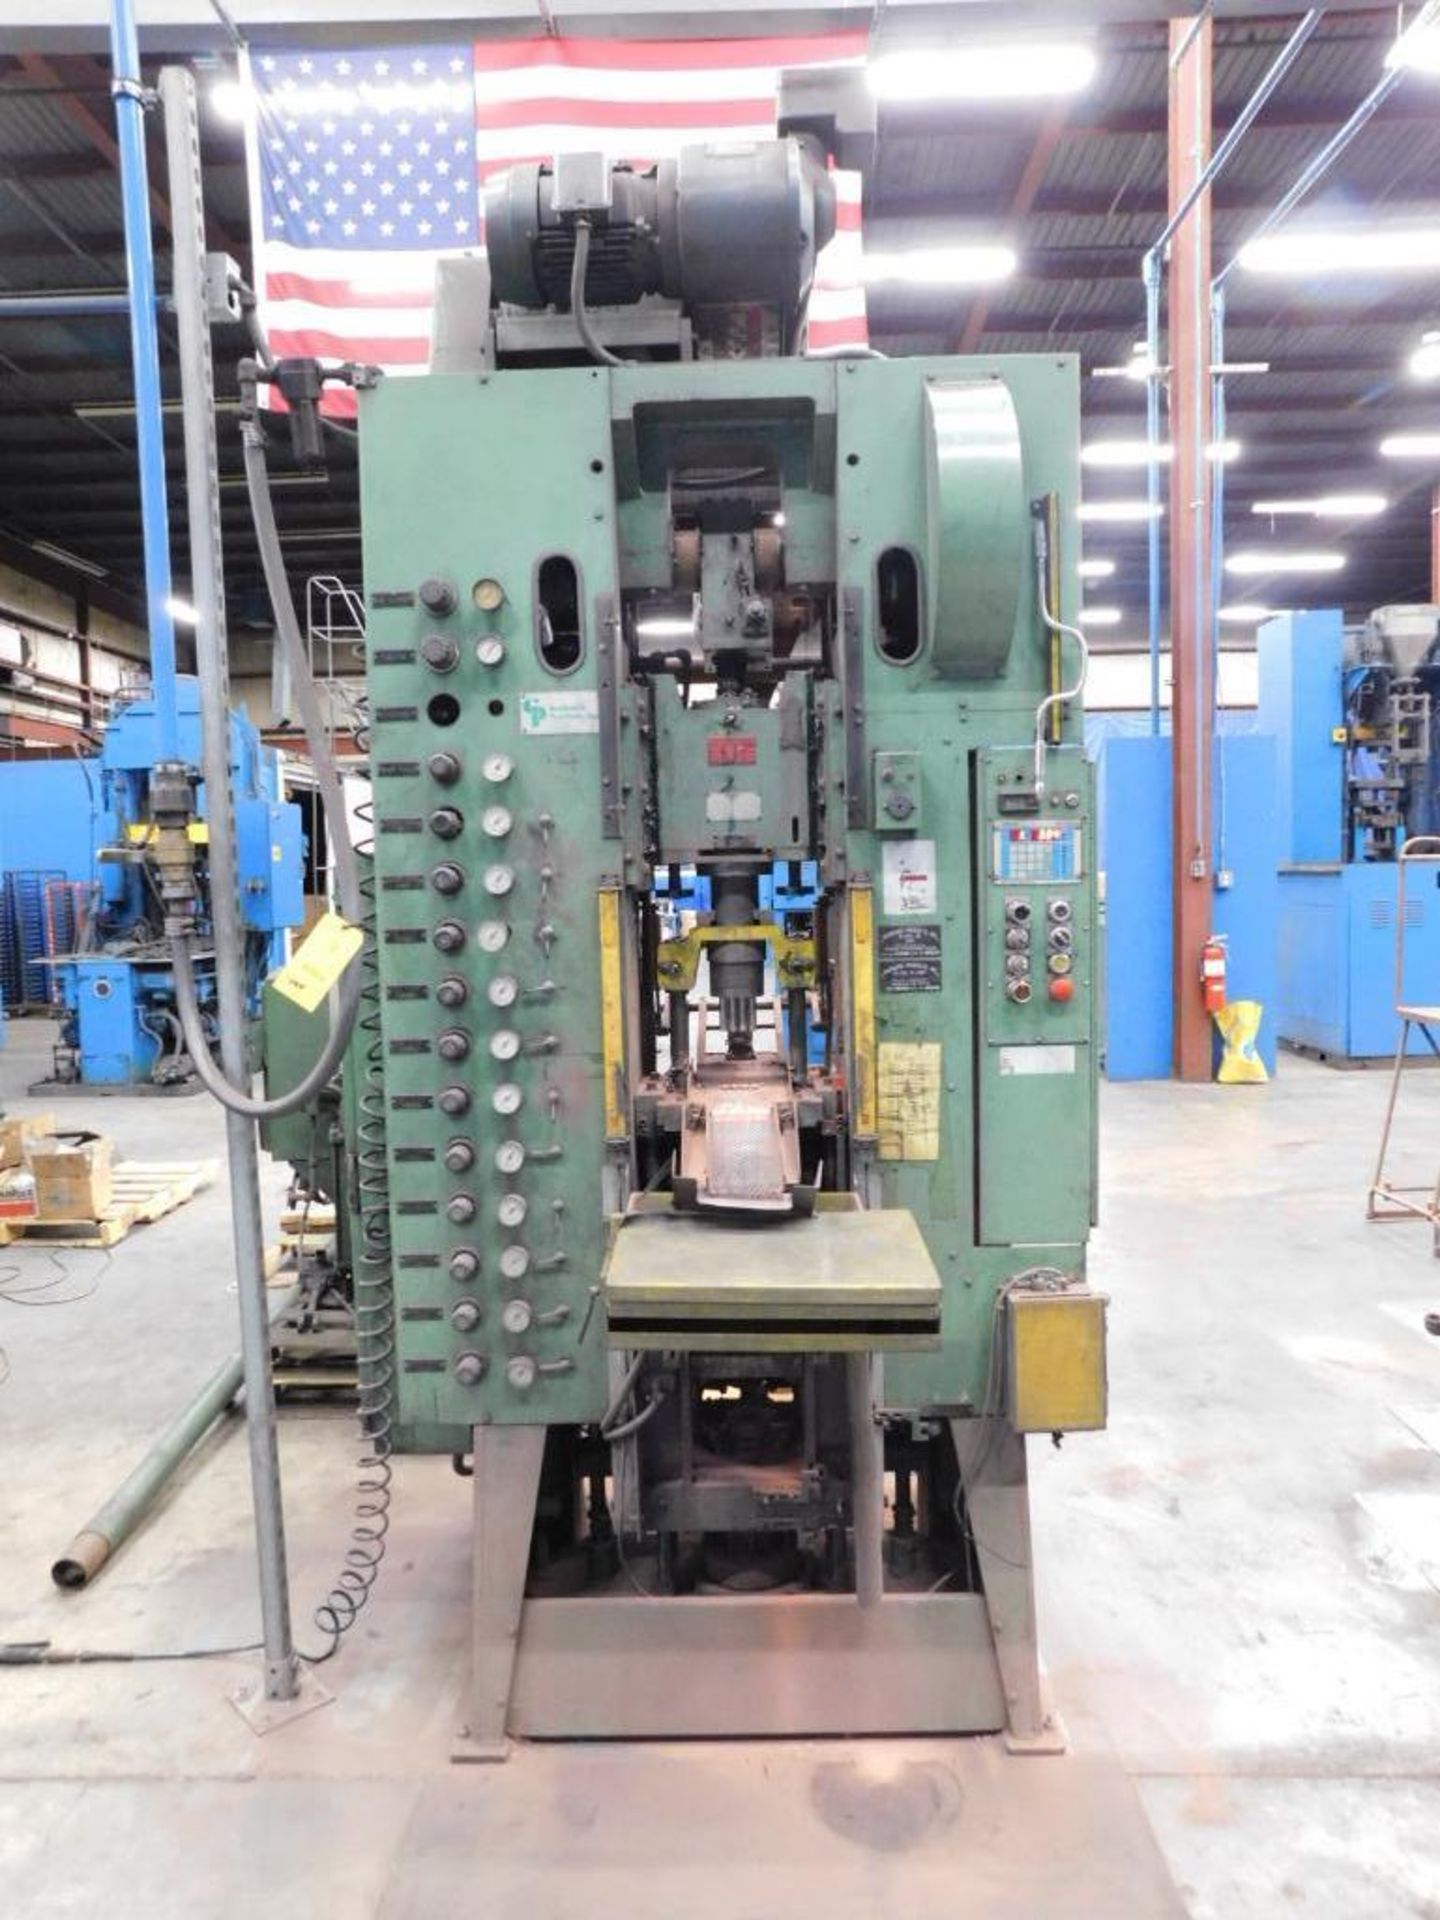 Gasbarre Powder Compacting Press, Mechanical, Model 30 Standard, S/N: 86256, 30 Ton Maximum Pressing